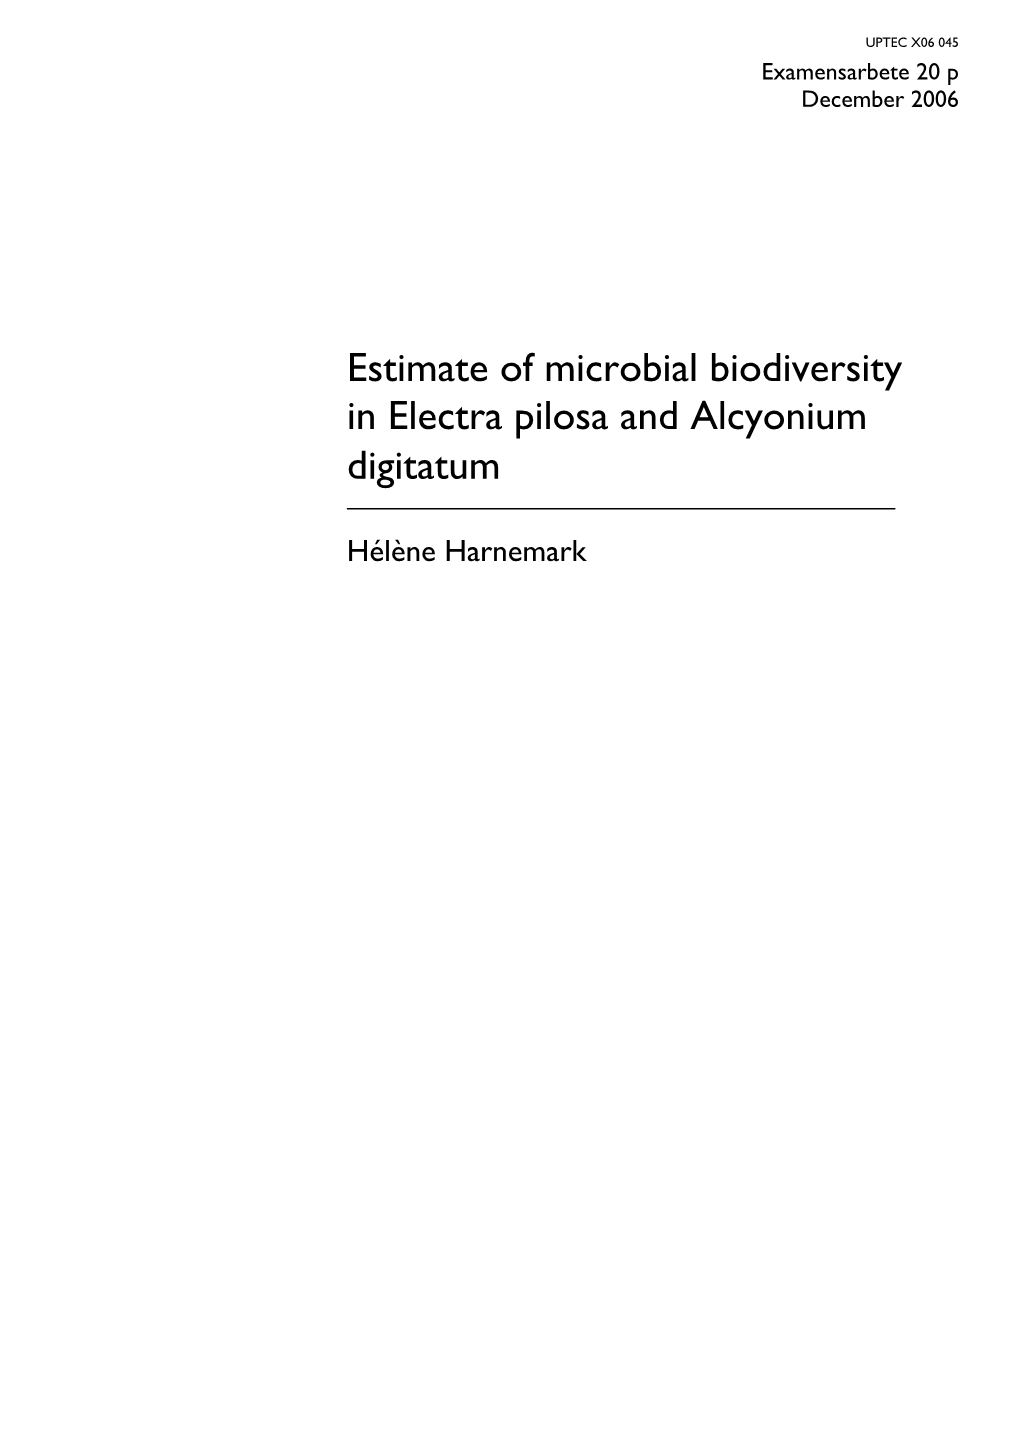 Estimate of Microbial Biodiversity in Electra Pilosa and Alcyonium Digitatum